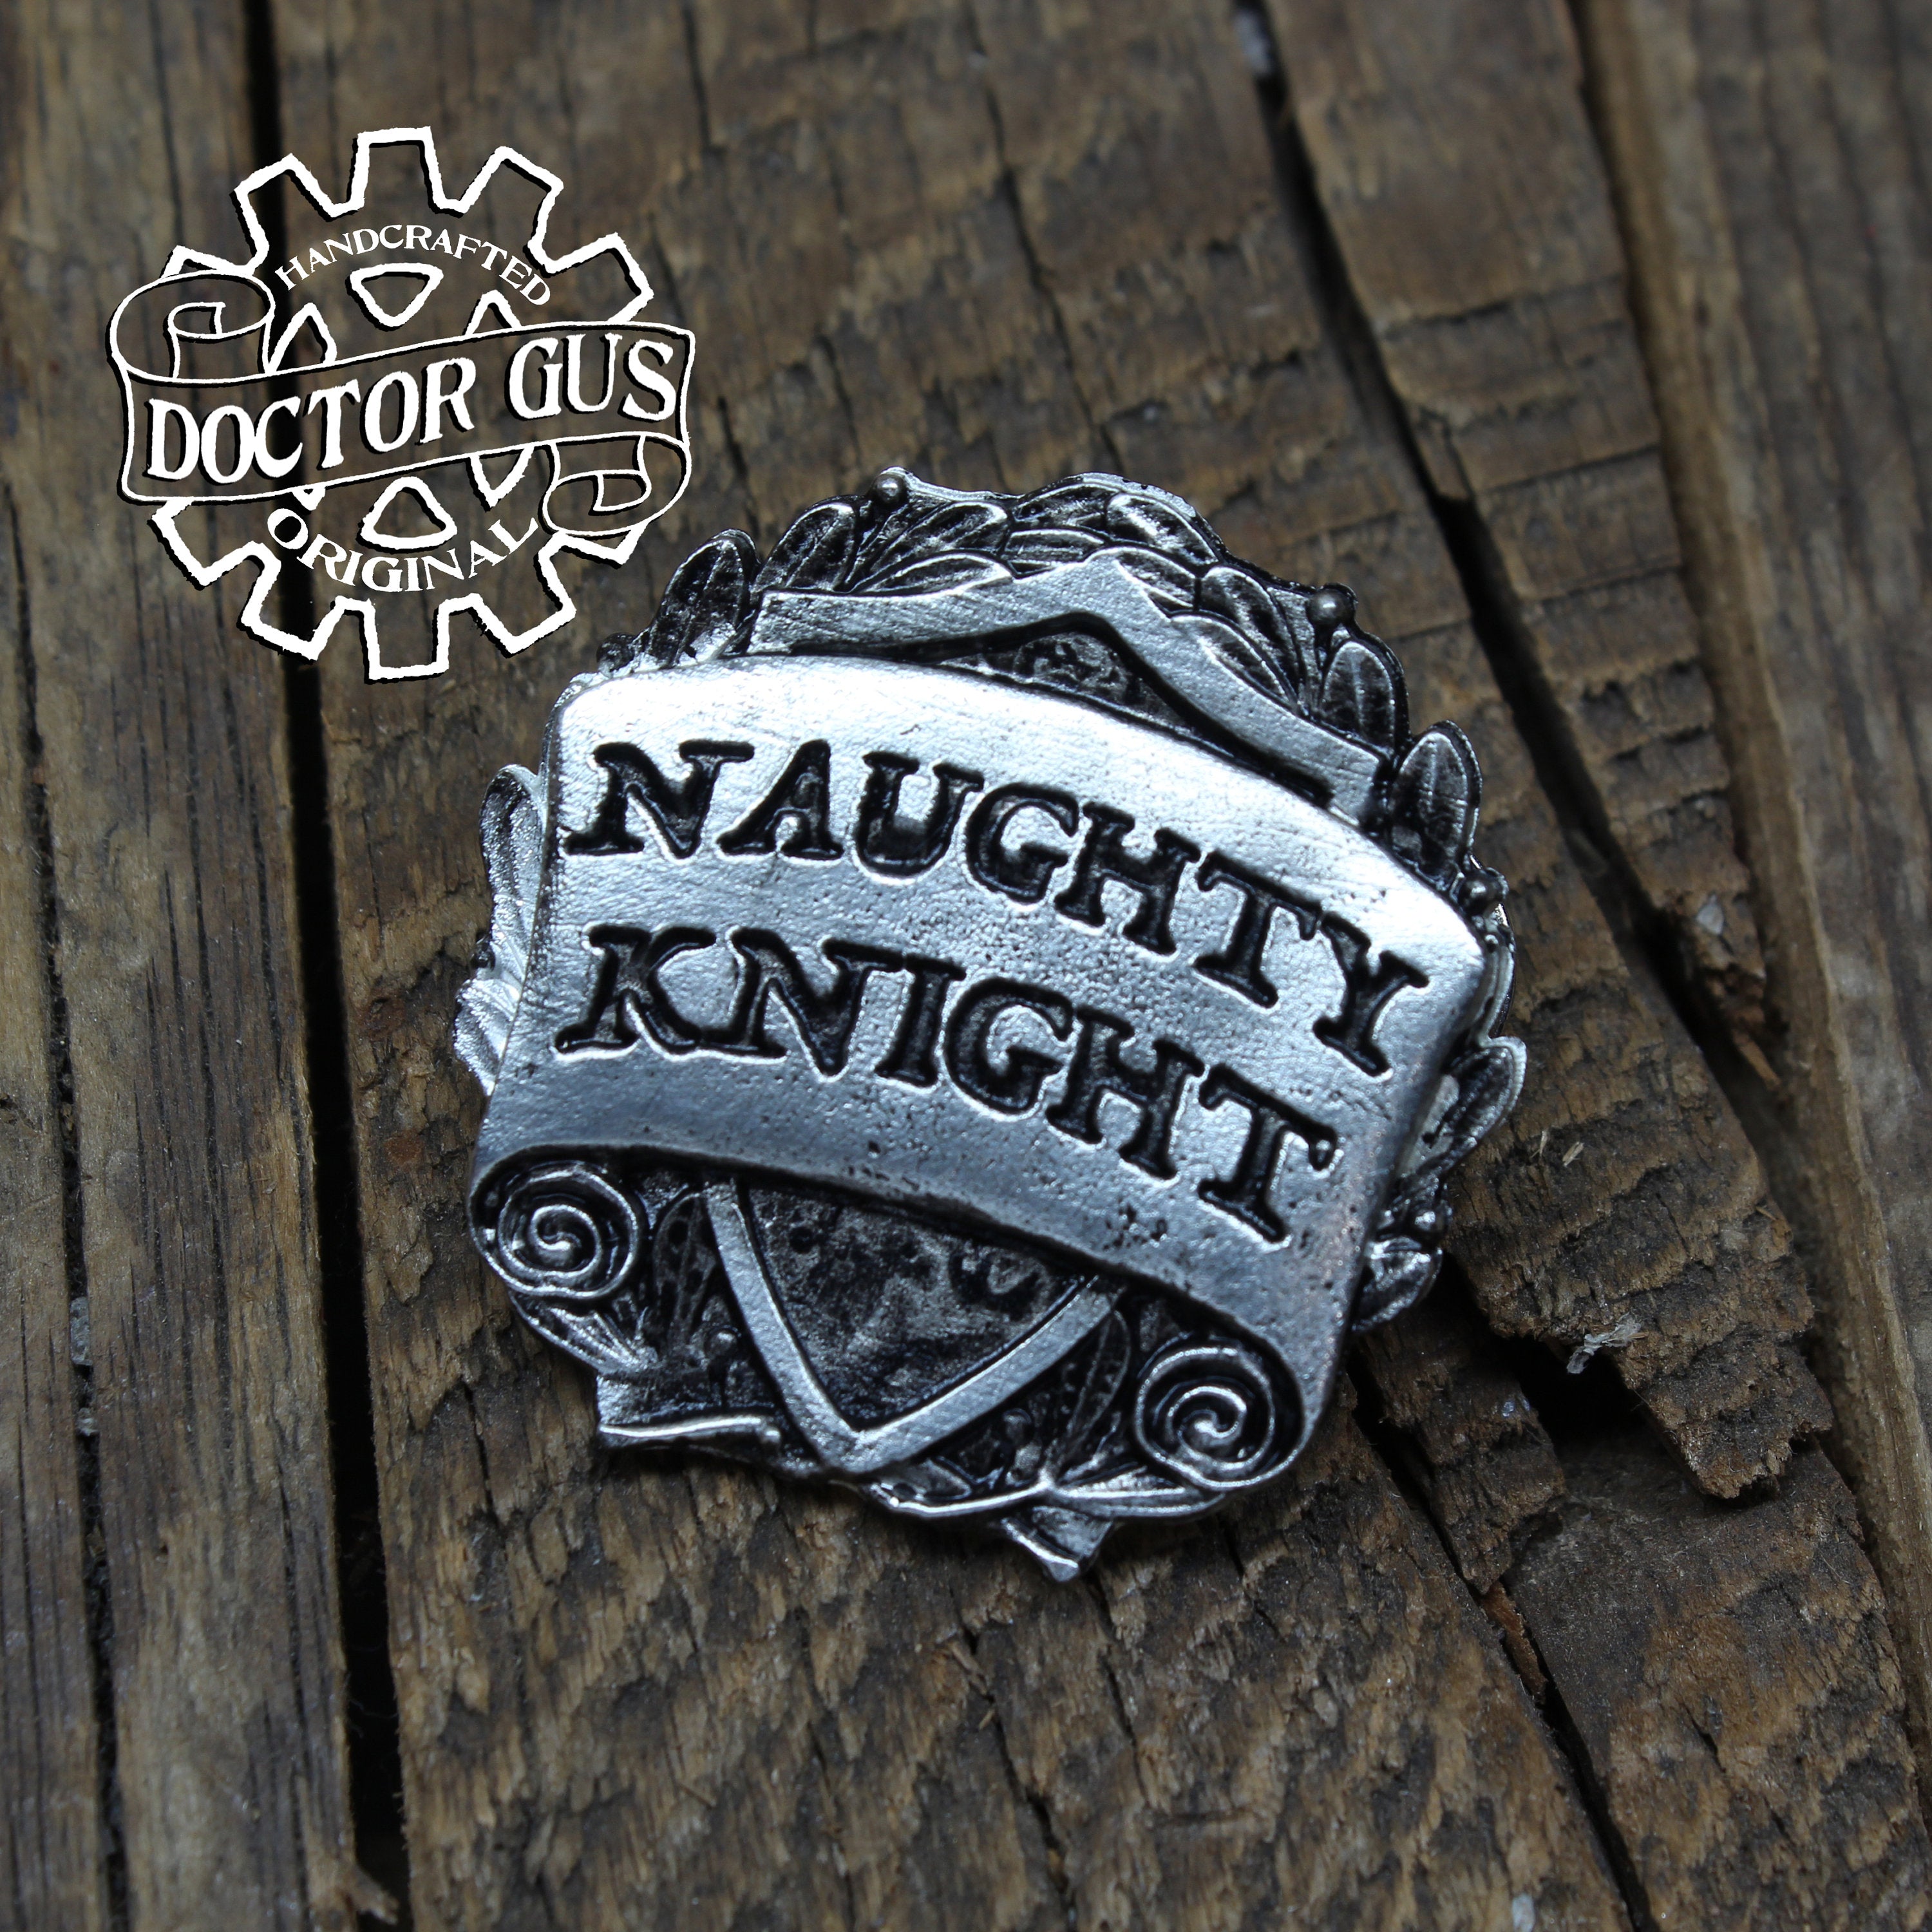 Naughty Knight Badge